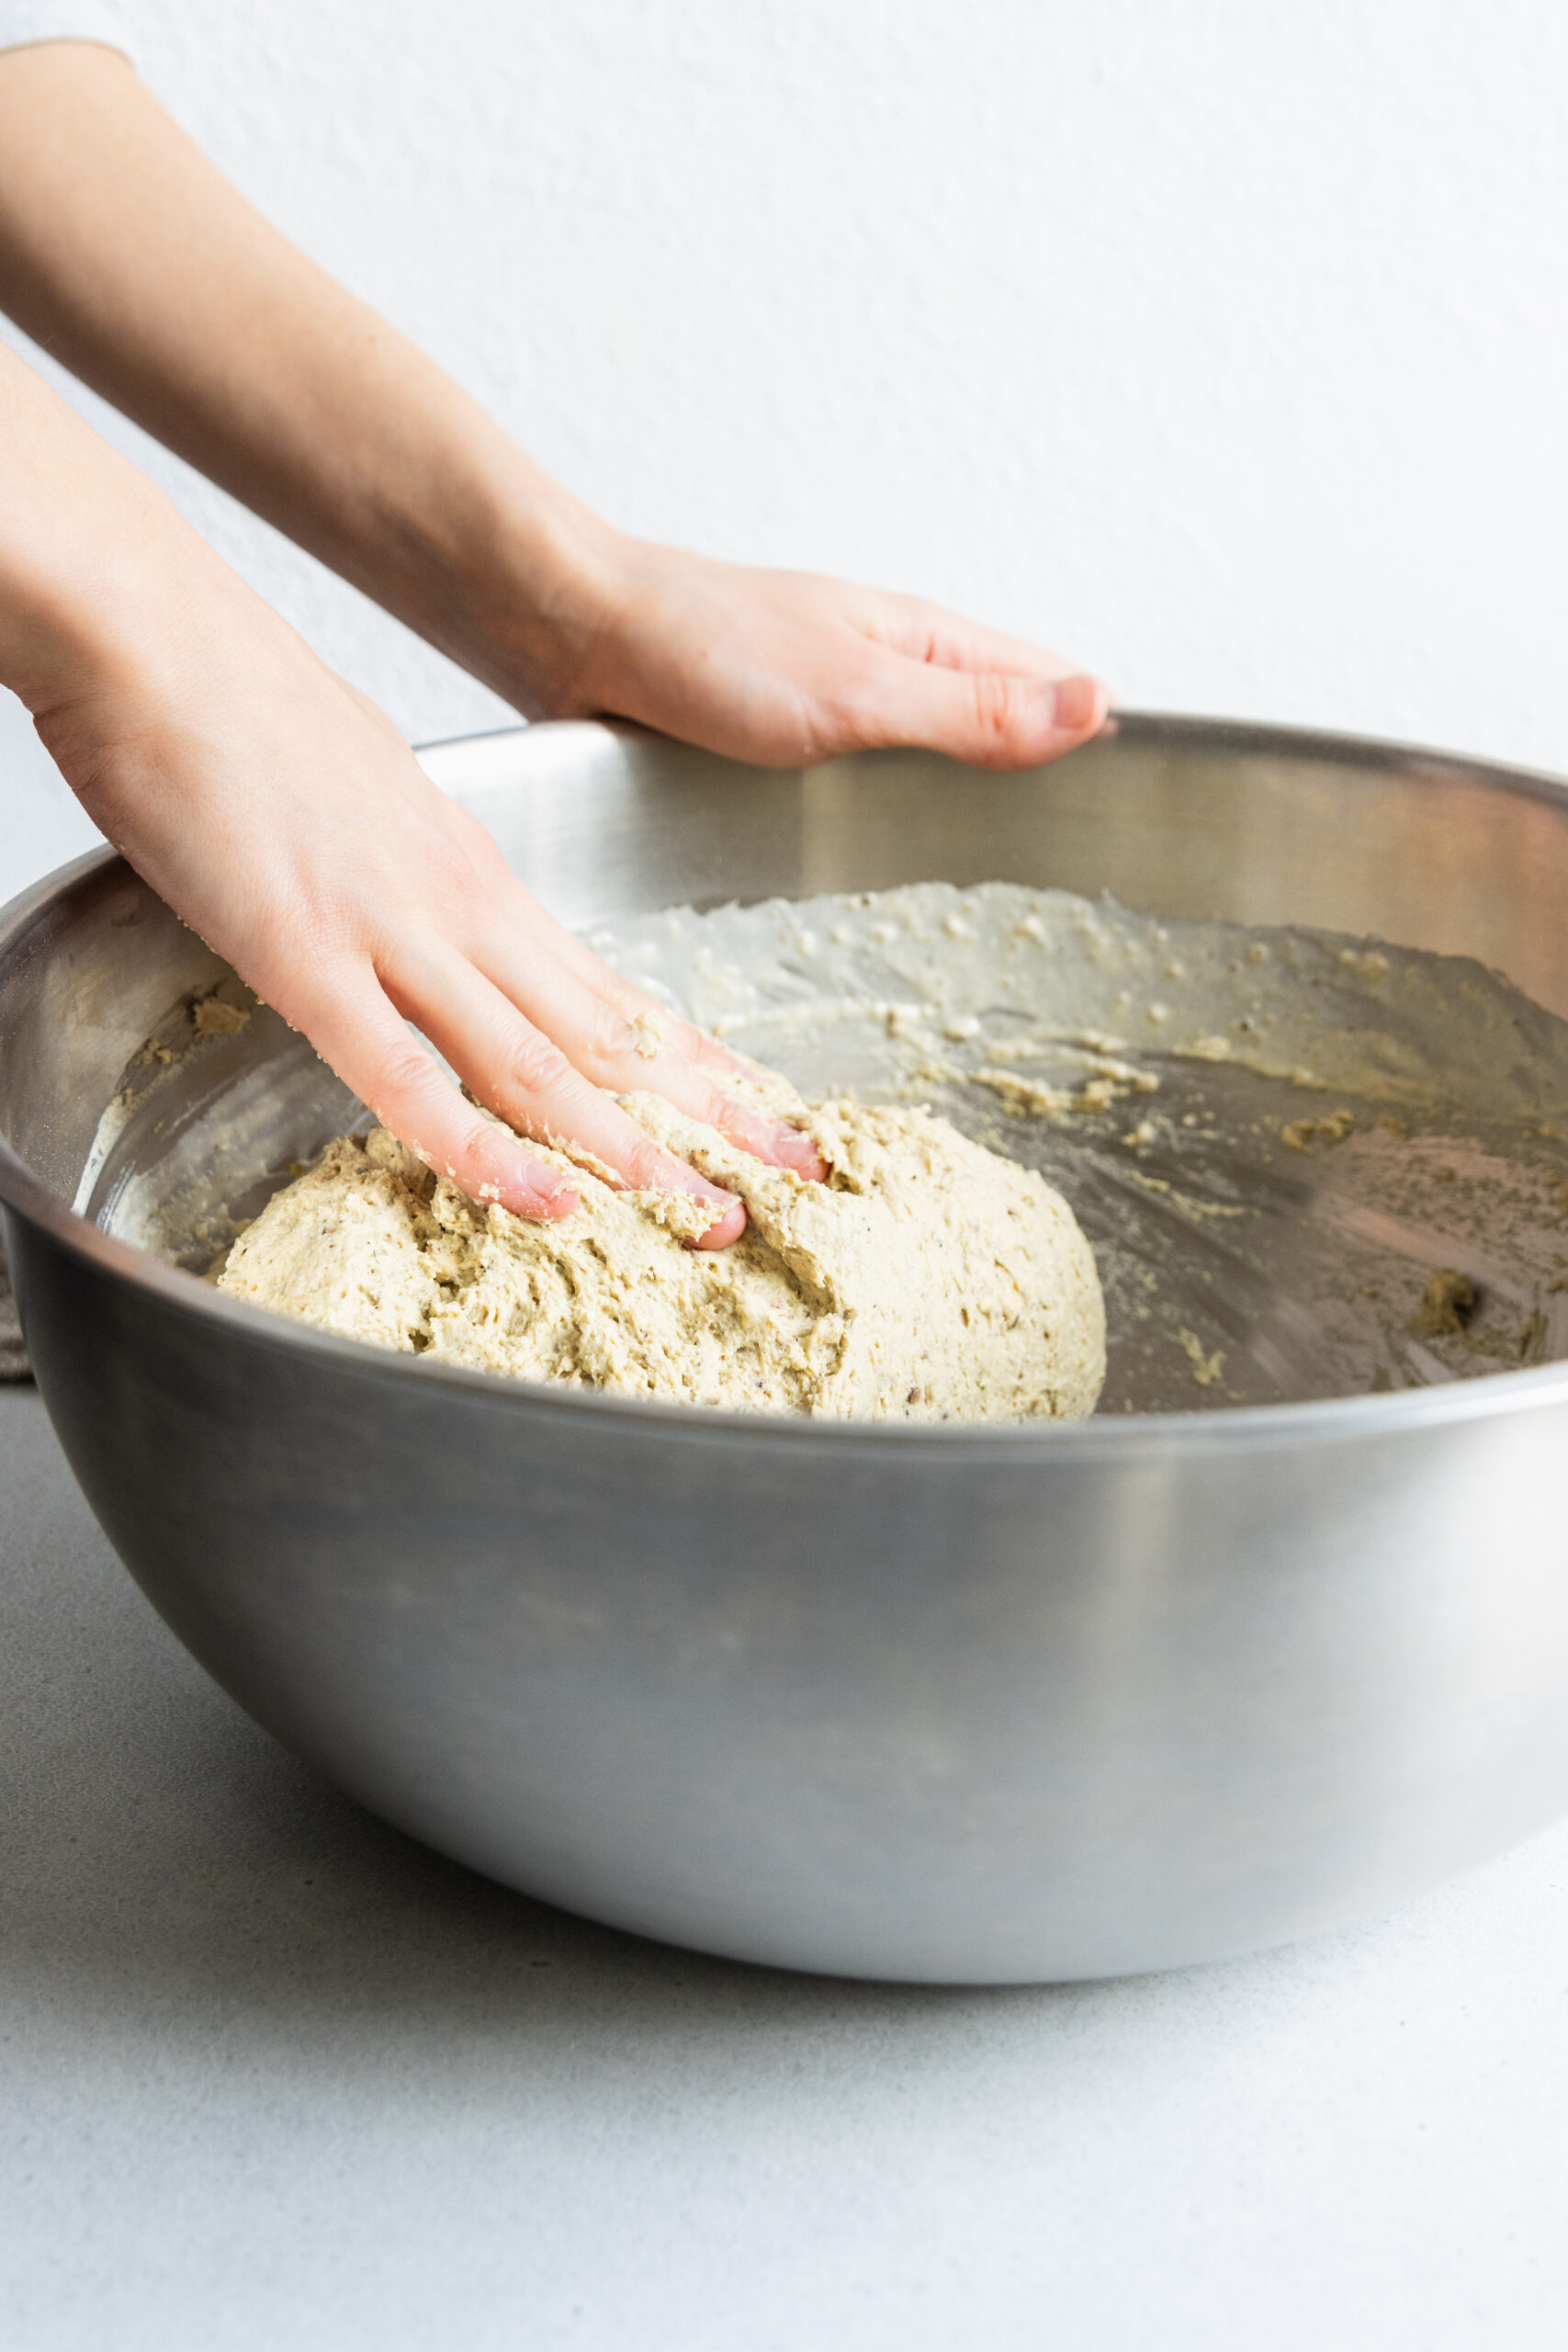 Kneading the vegan turkey roast dough